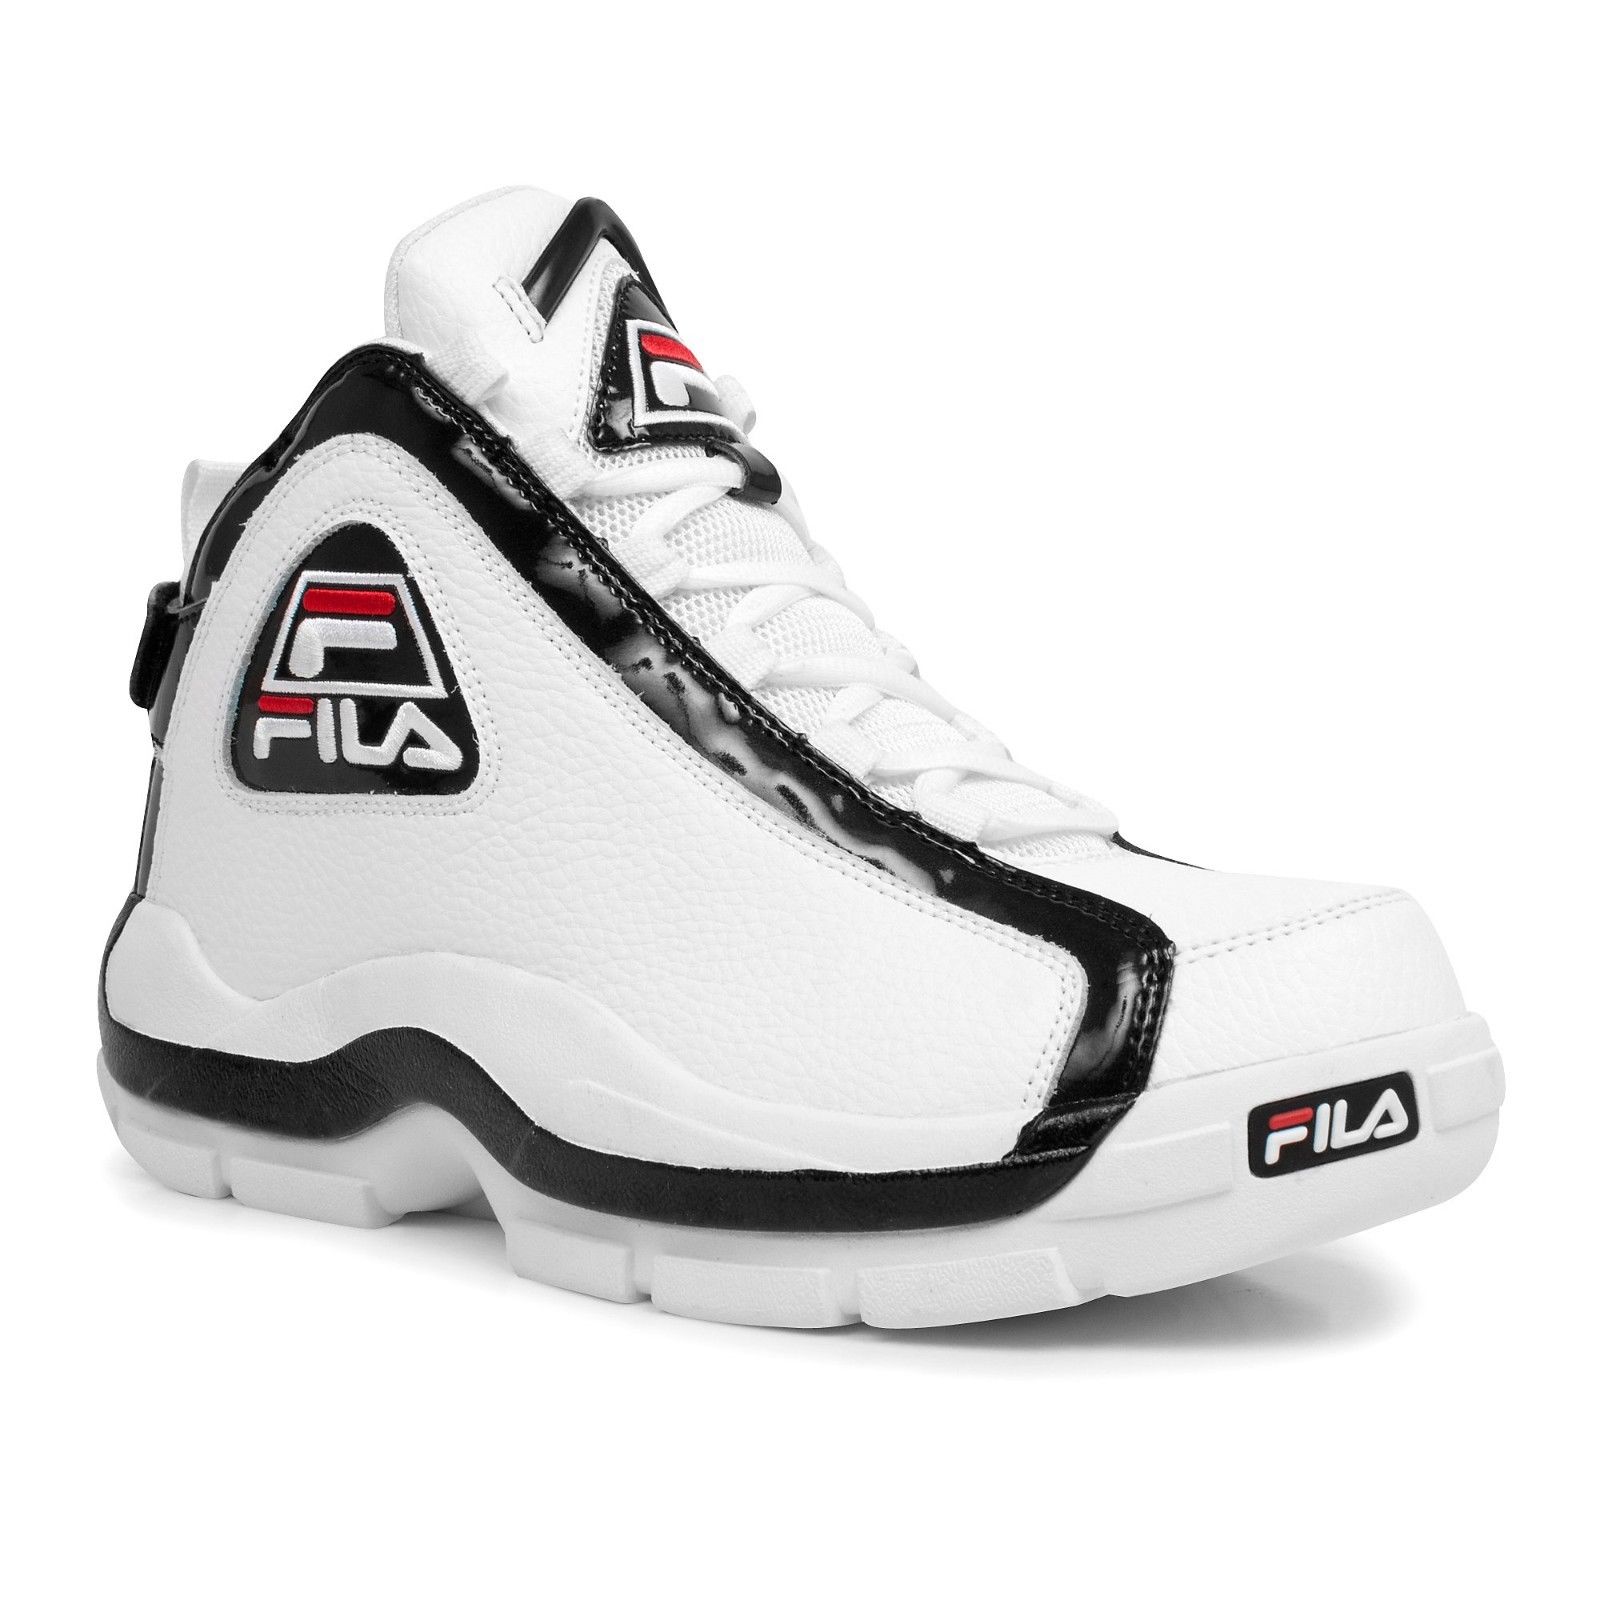 Fila 96 Men's Basketball Shoes Sneakers Grant Hill White -1vb90031122 ...